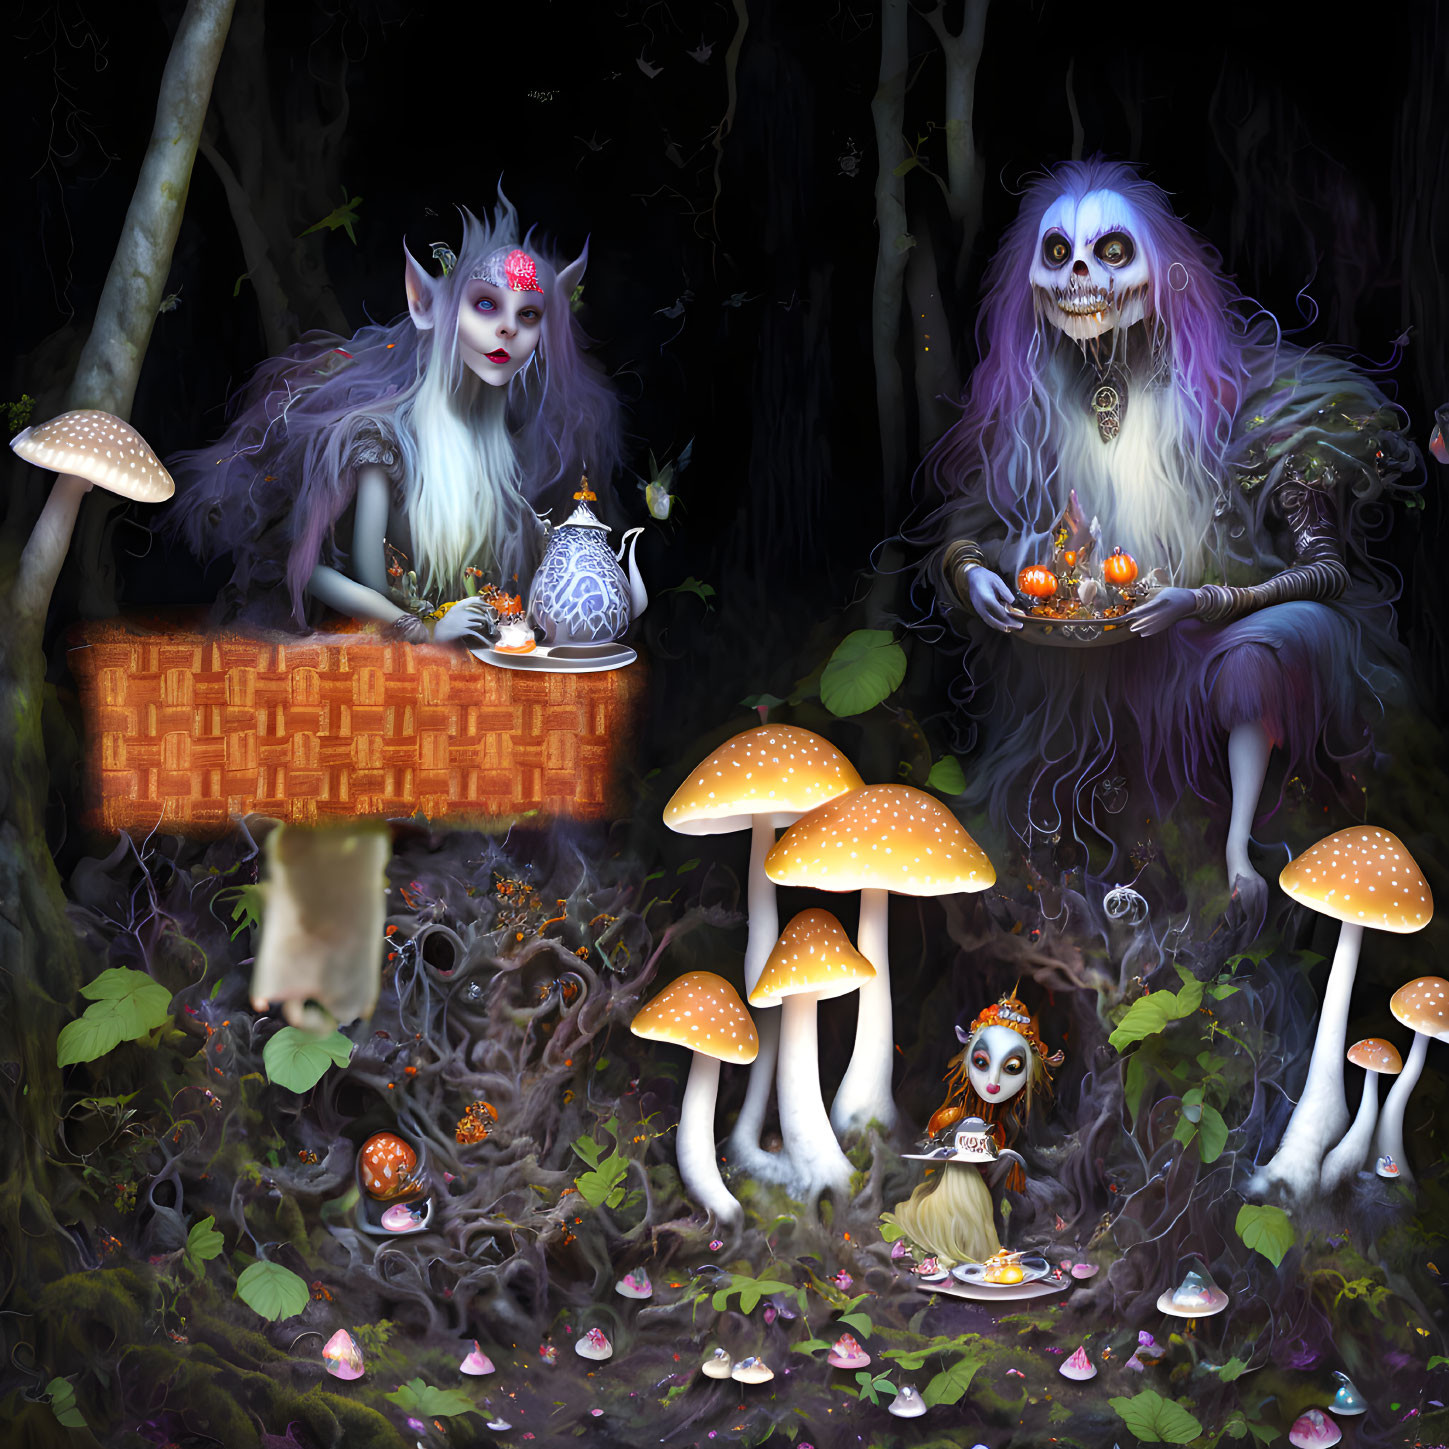 The Troll Family Having Shroom Tea in the Forest